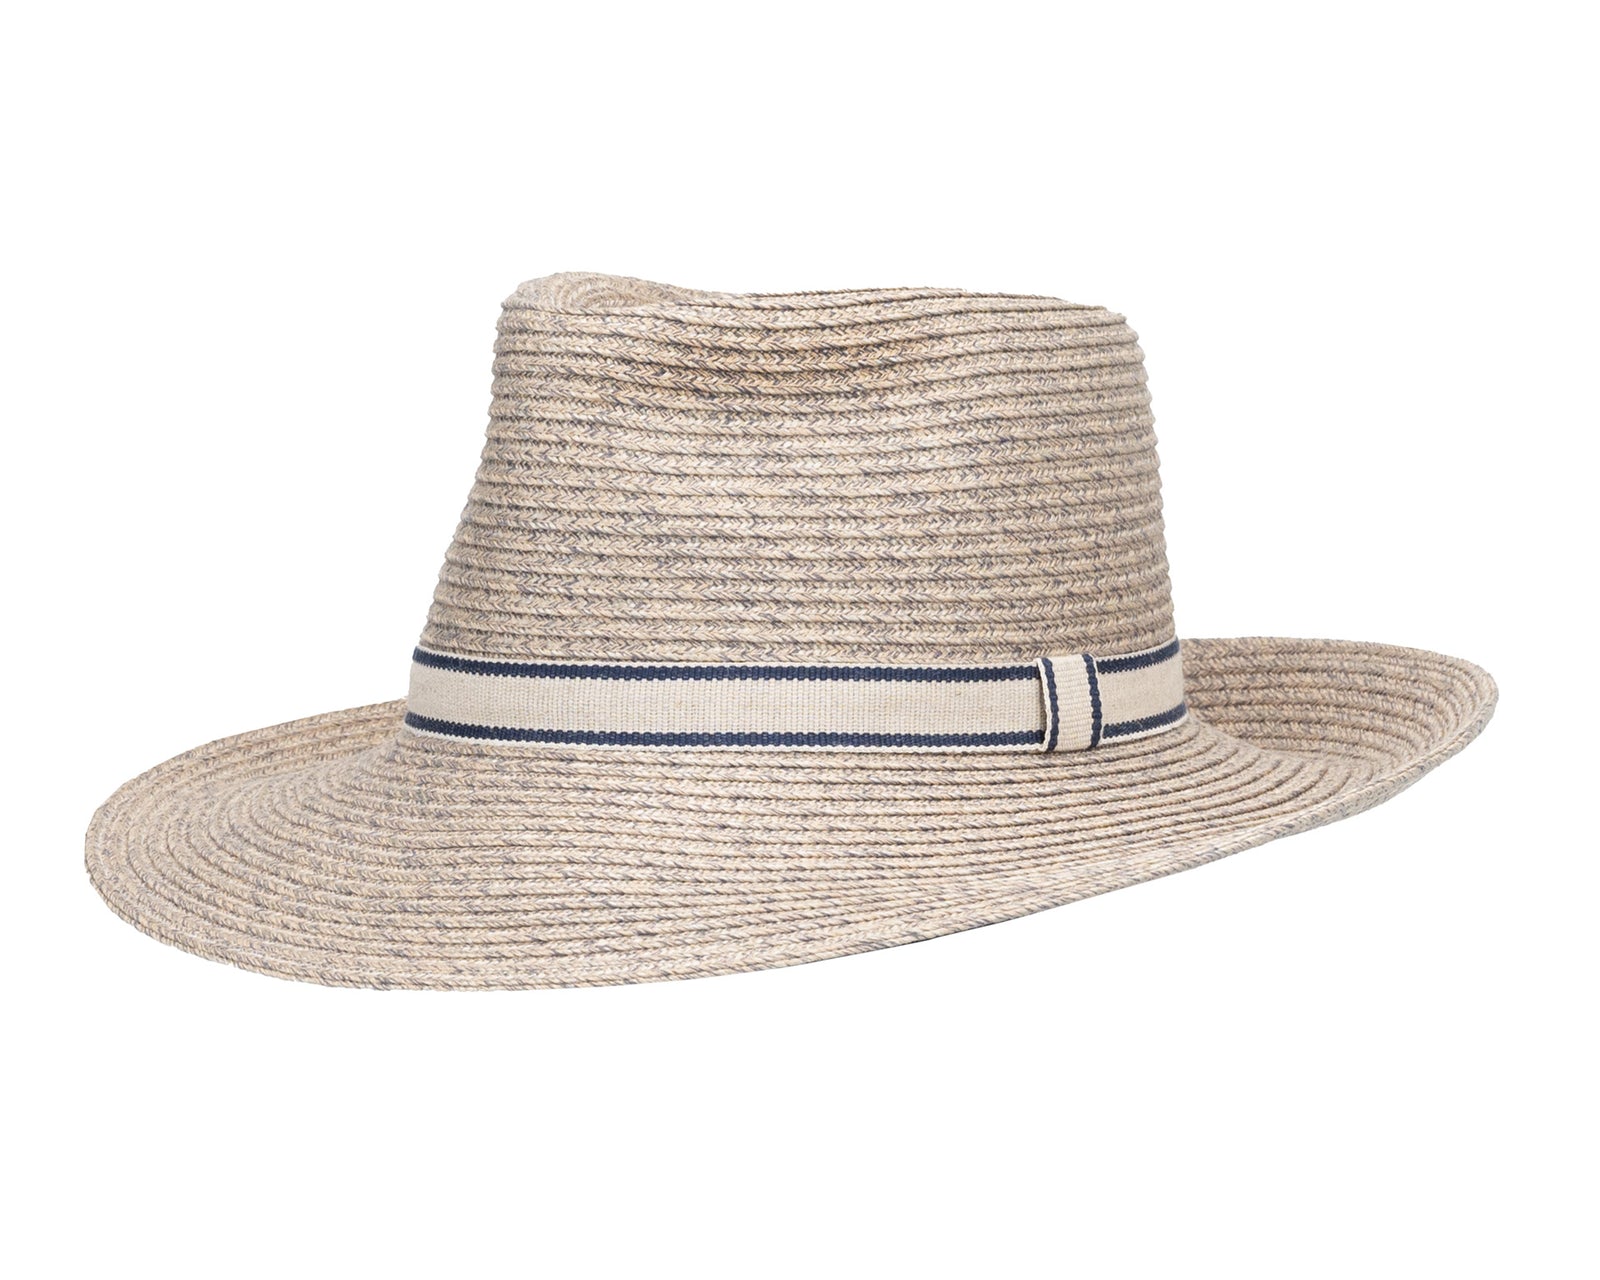 Straw Hats, Summer Styles